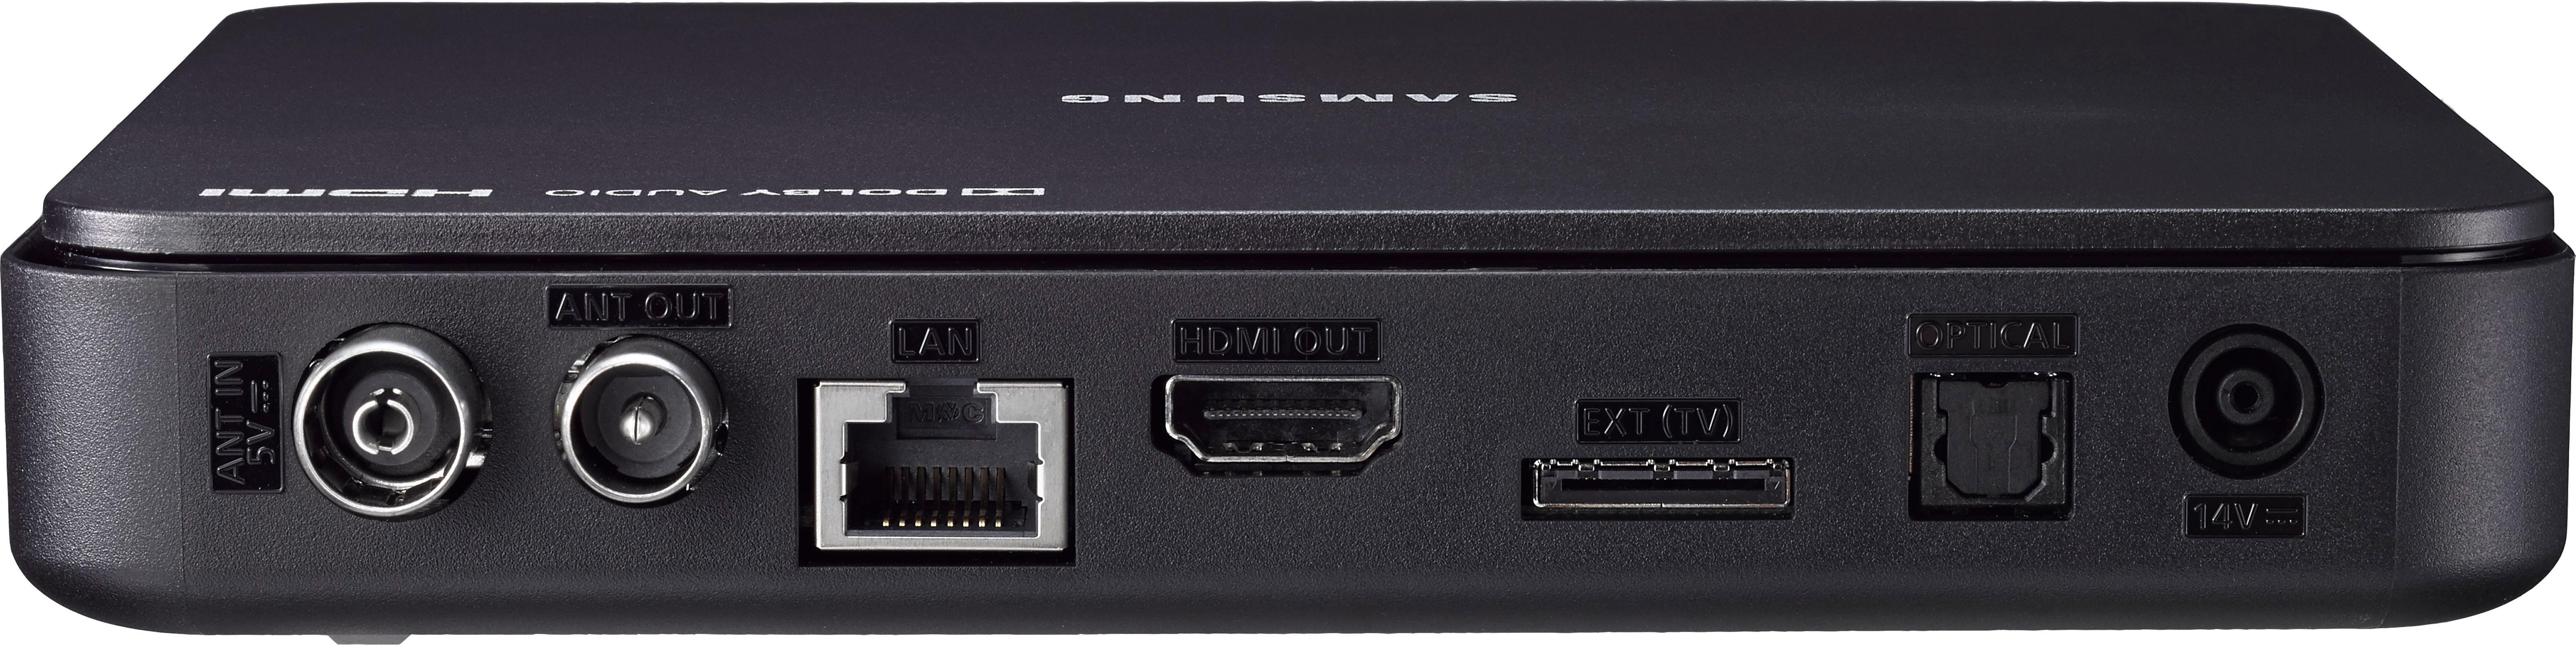 SAMSUNG GX-MB 540 Receiver (DVB-T, TL/ZG DVB-T2 Schwarz) (H.265)